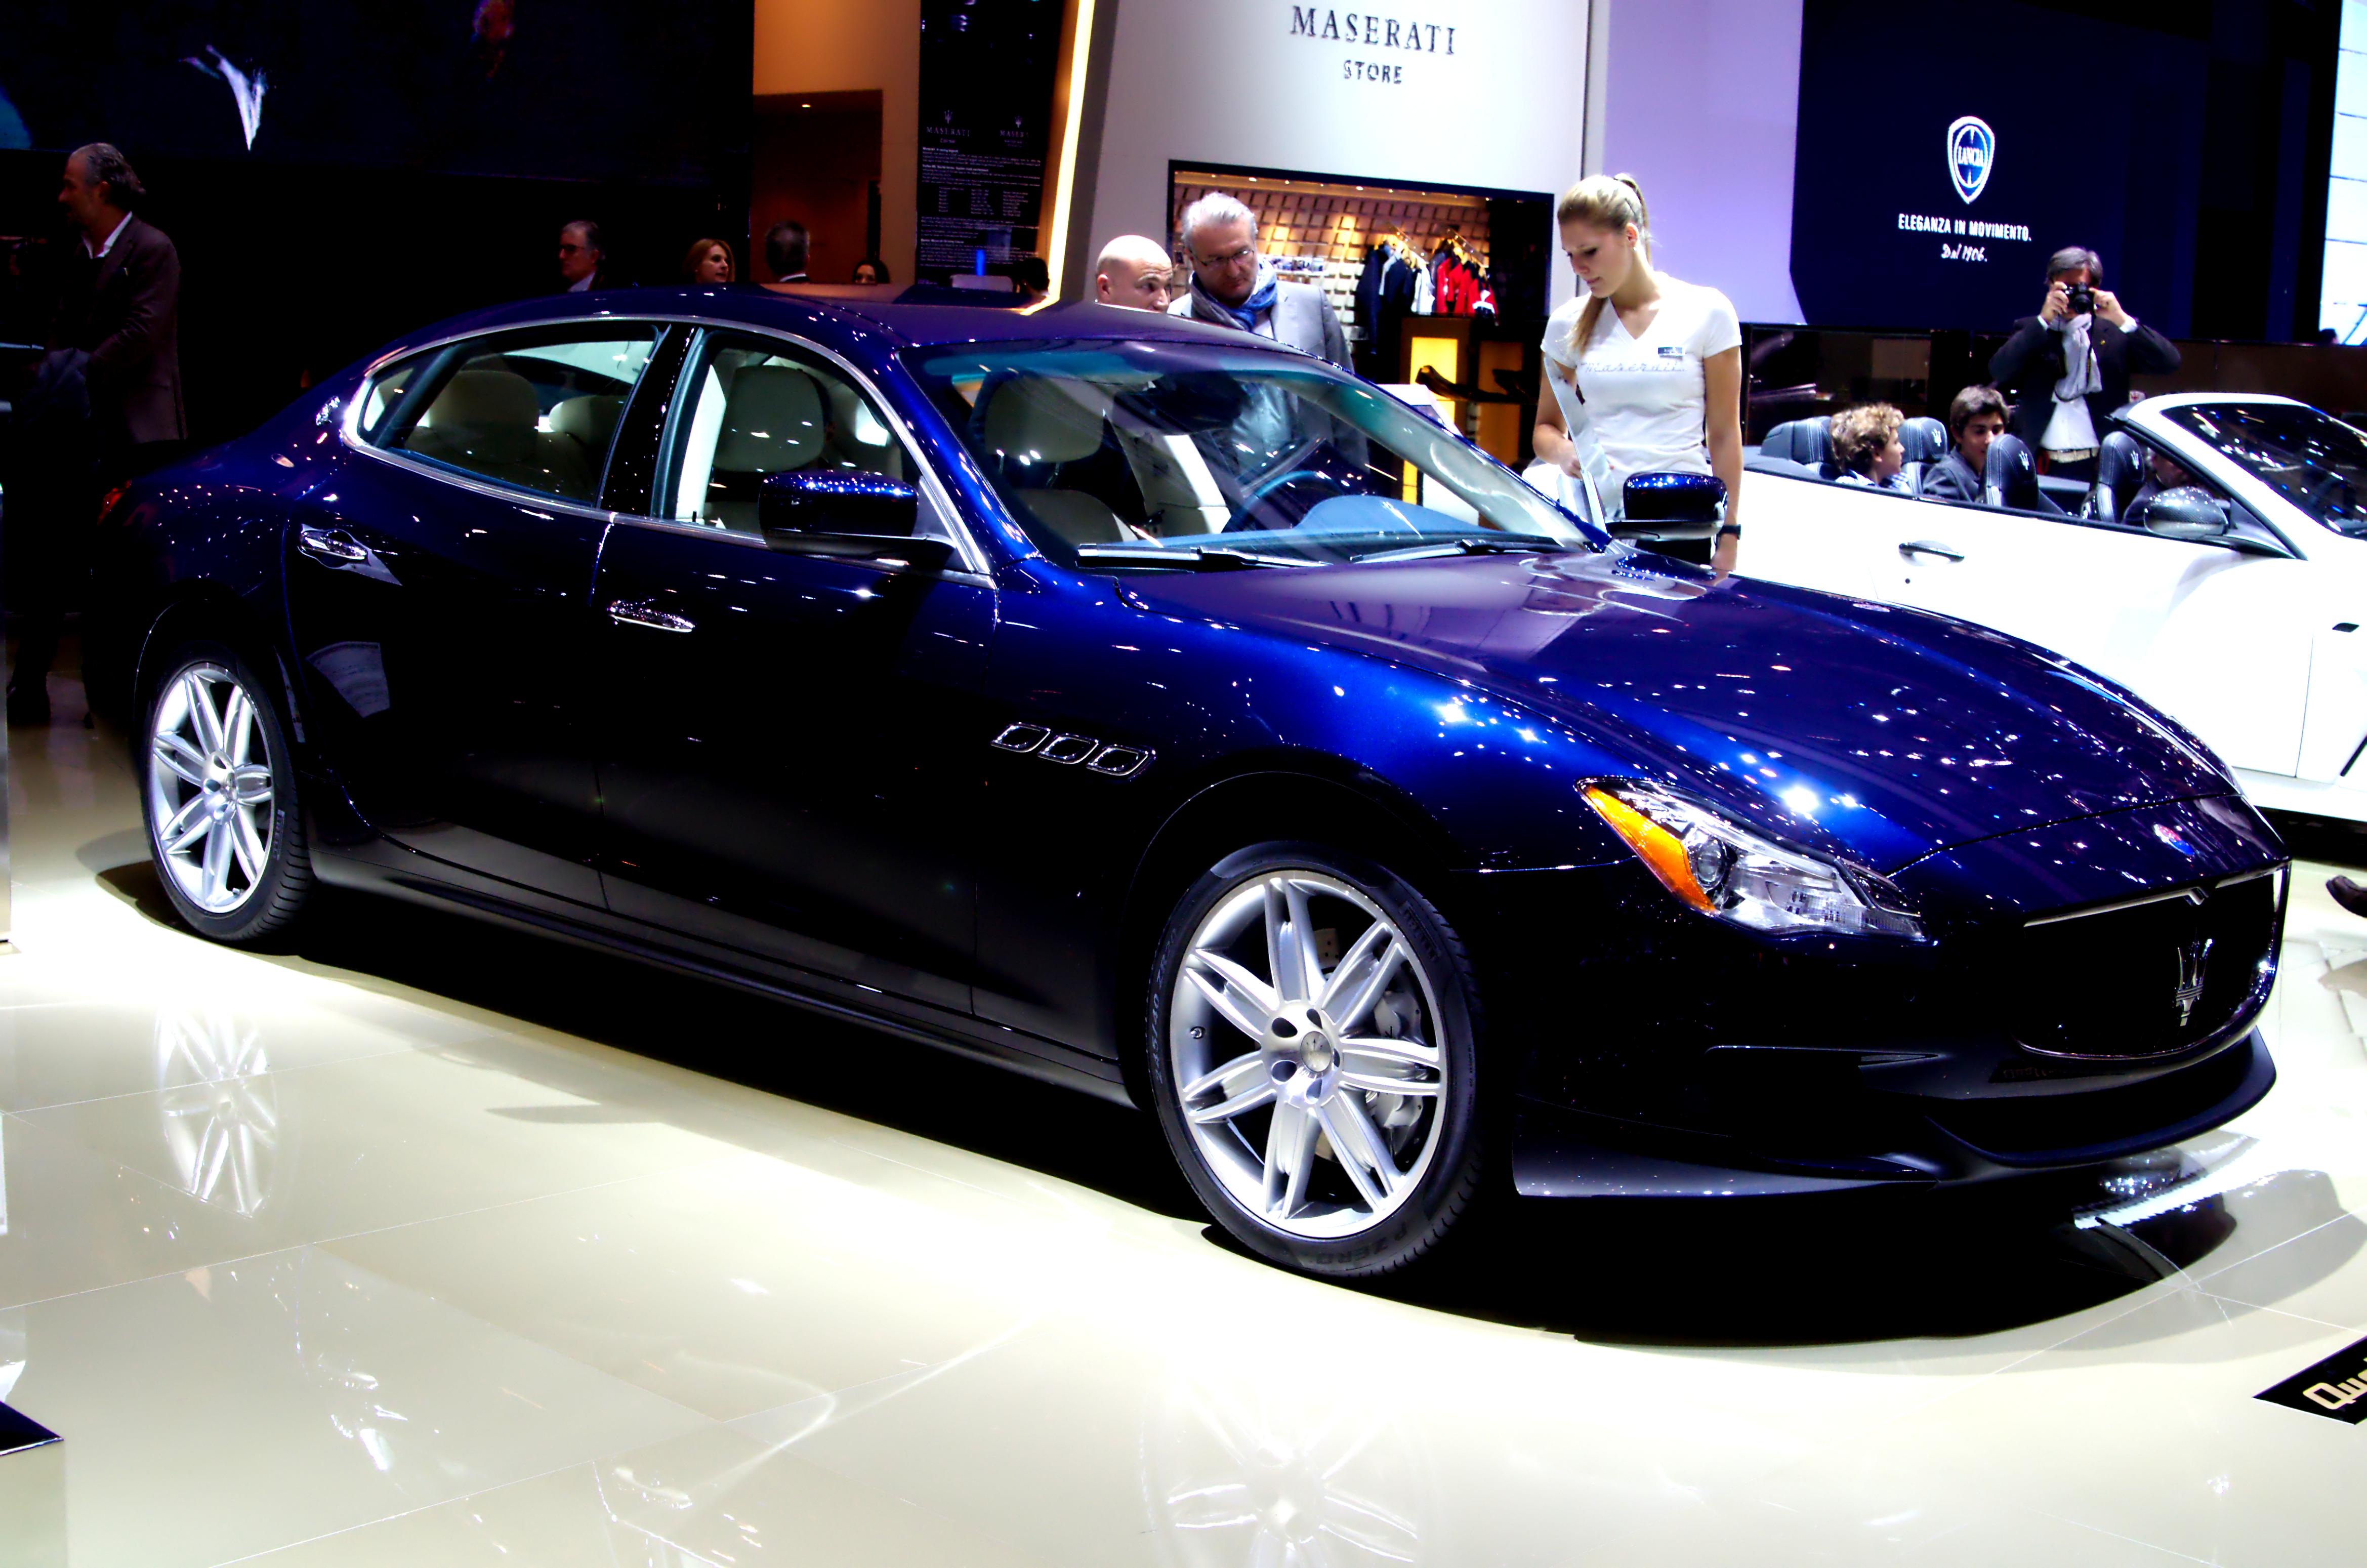 Vi 2013. Мазерати Кватропорте 6. Мазерати Кватропорте 2013. Maserati Quattroporte 2004 Blue. Maserati Quattroporte синий.